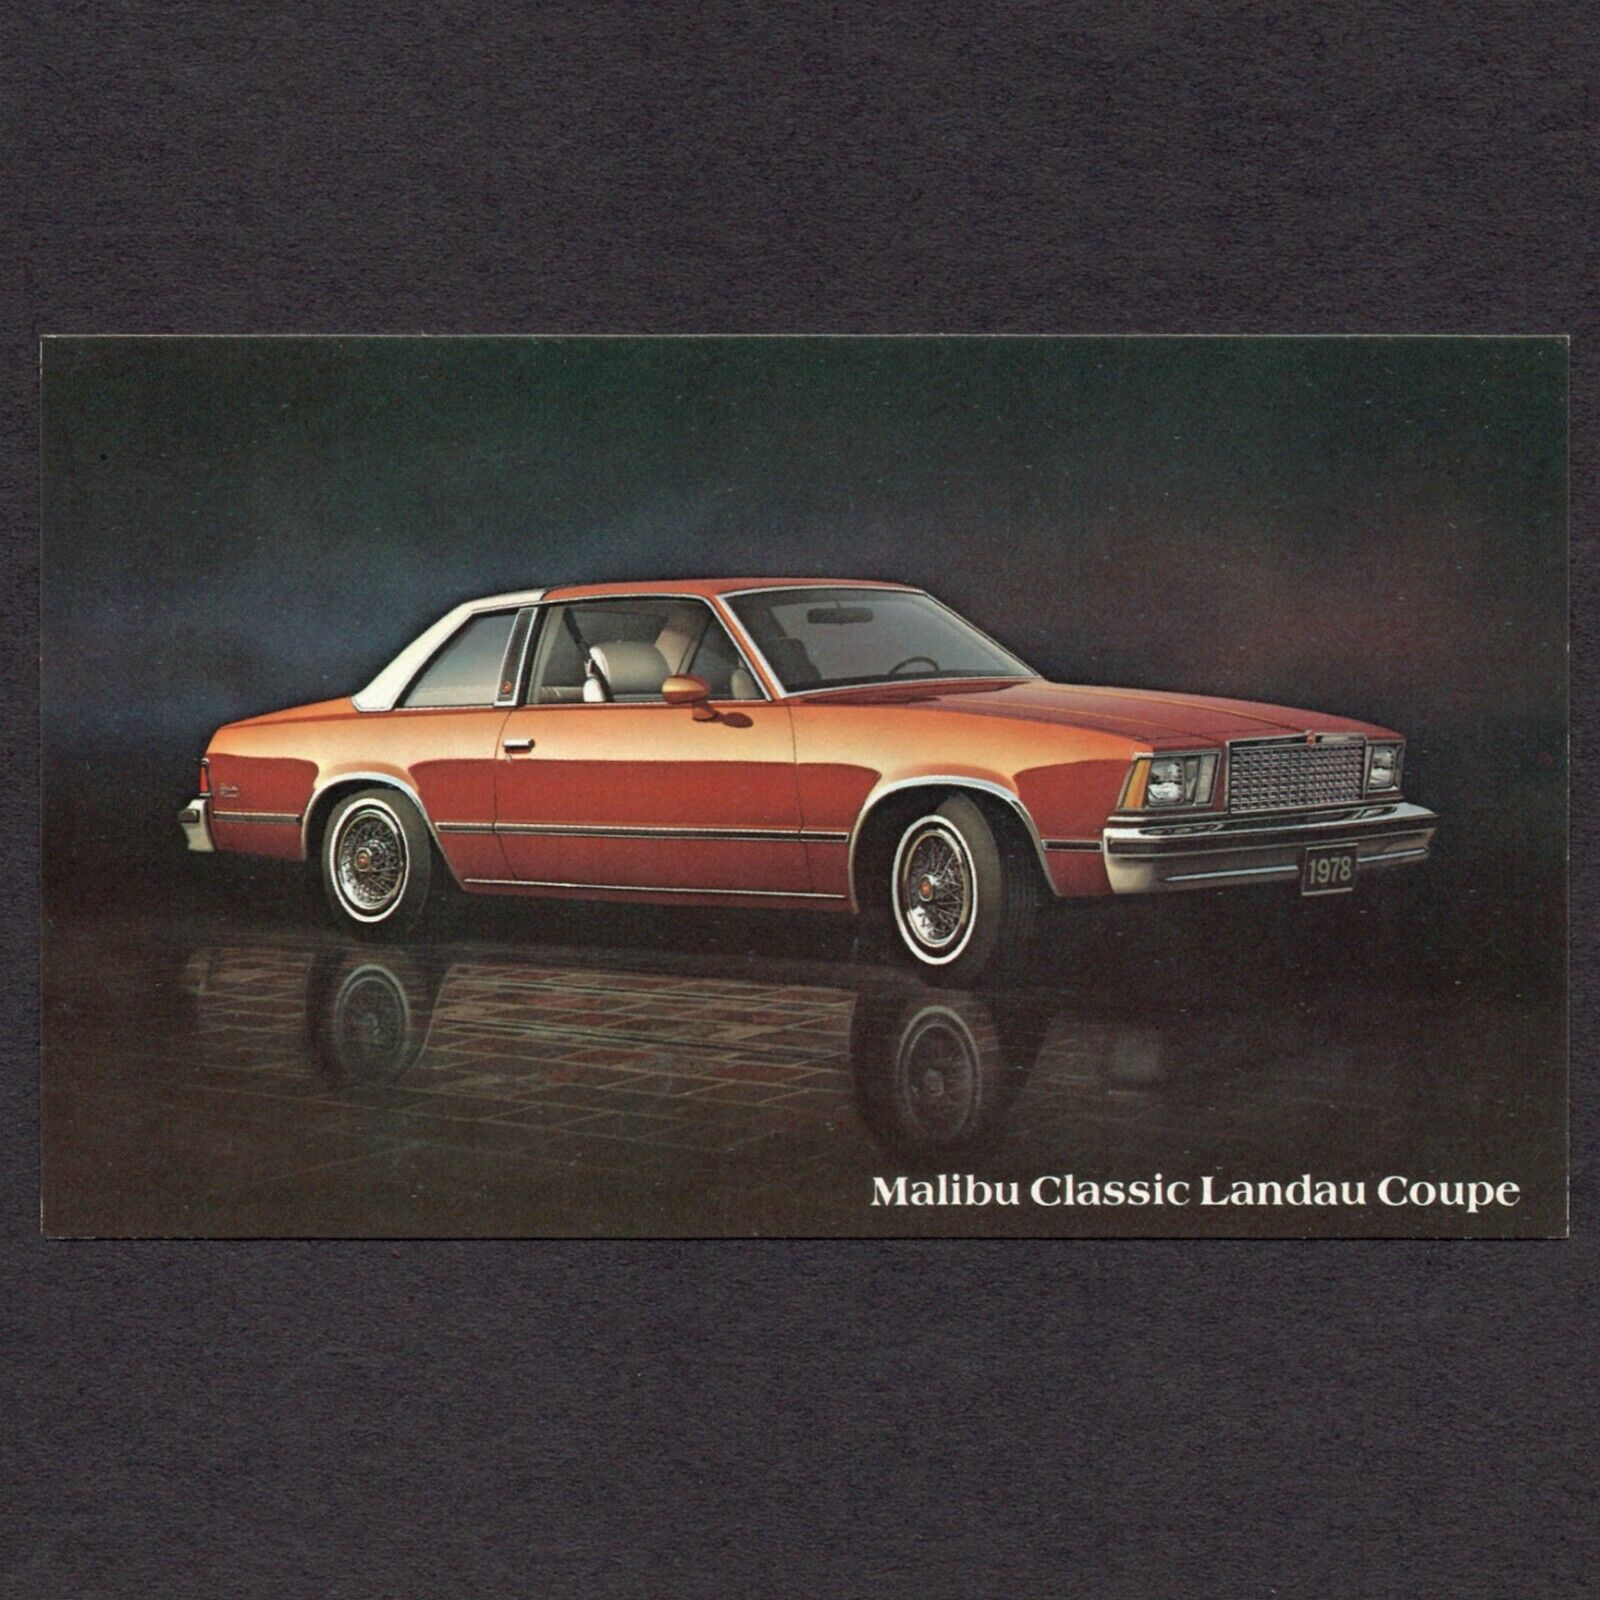 1978 Chevrolet MALIBU Classic LANDAU COUPE: Original NOS Dealer Postcard UNUSED